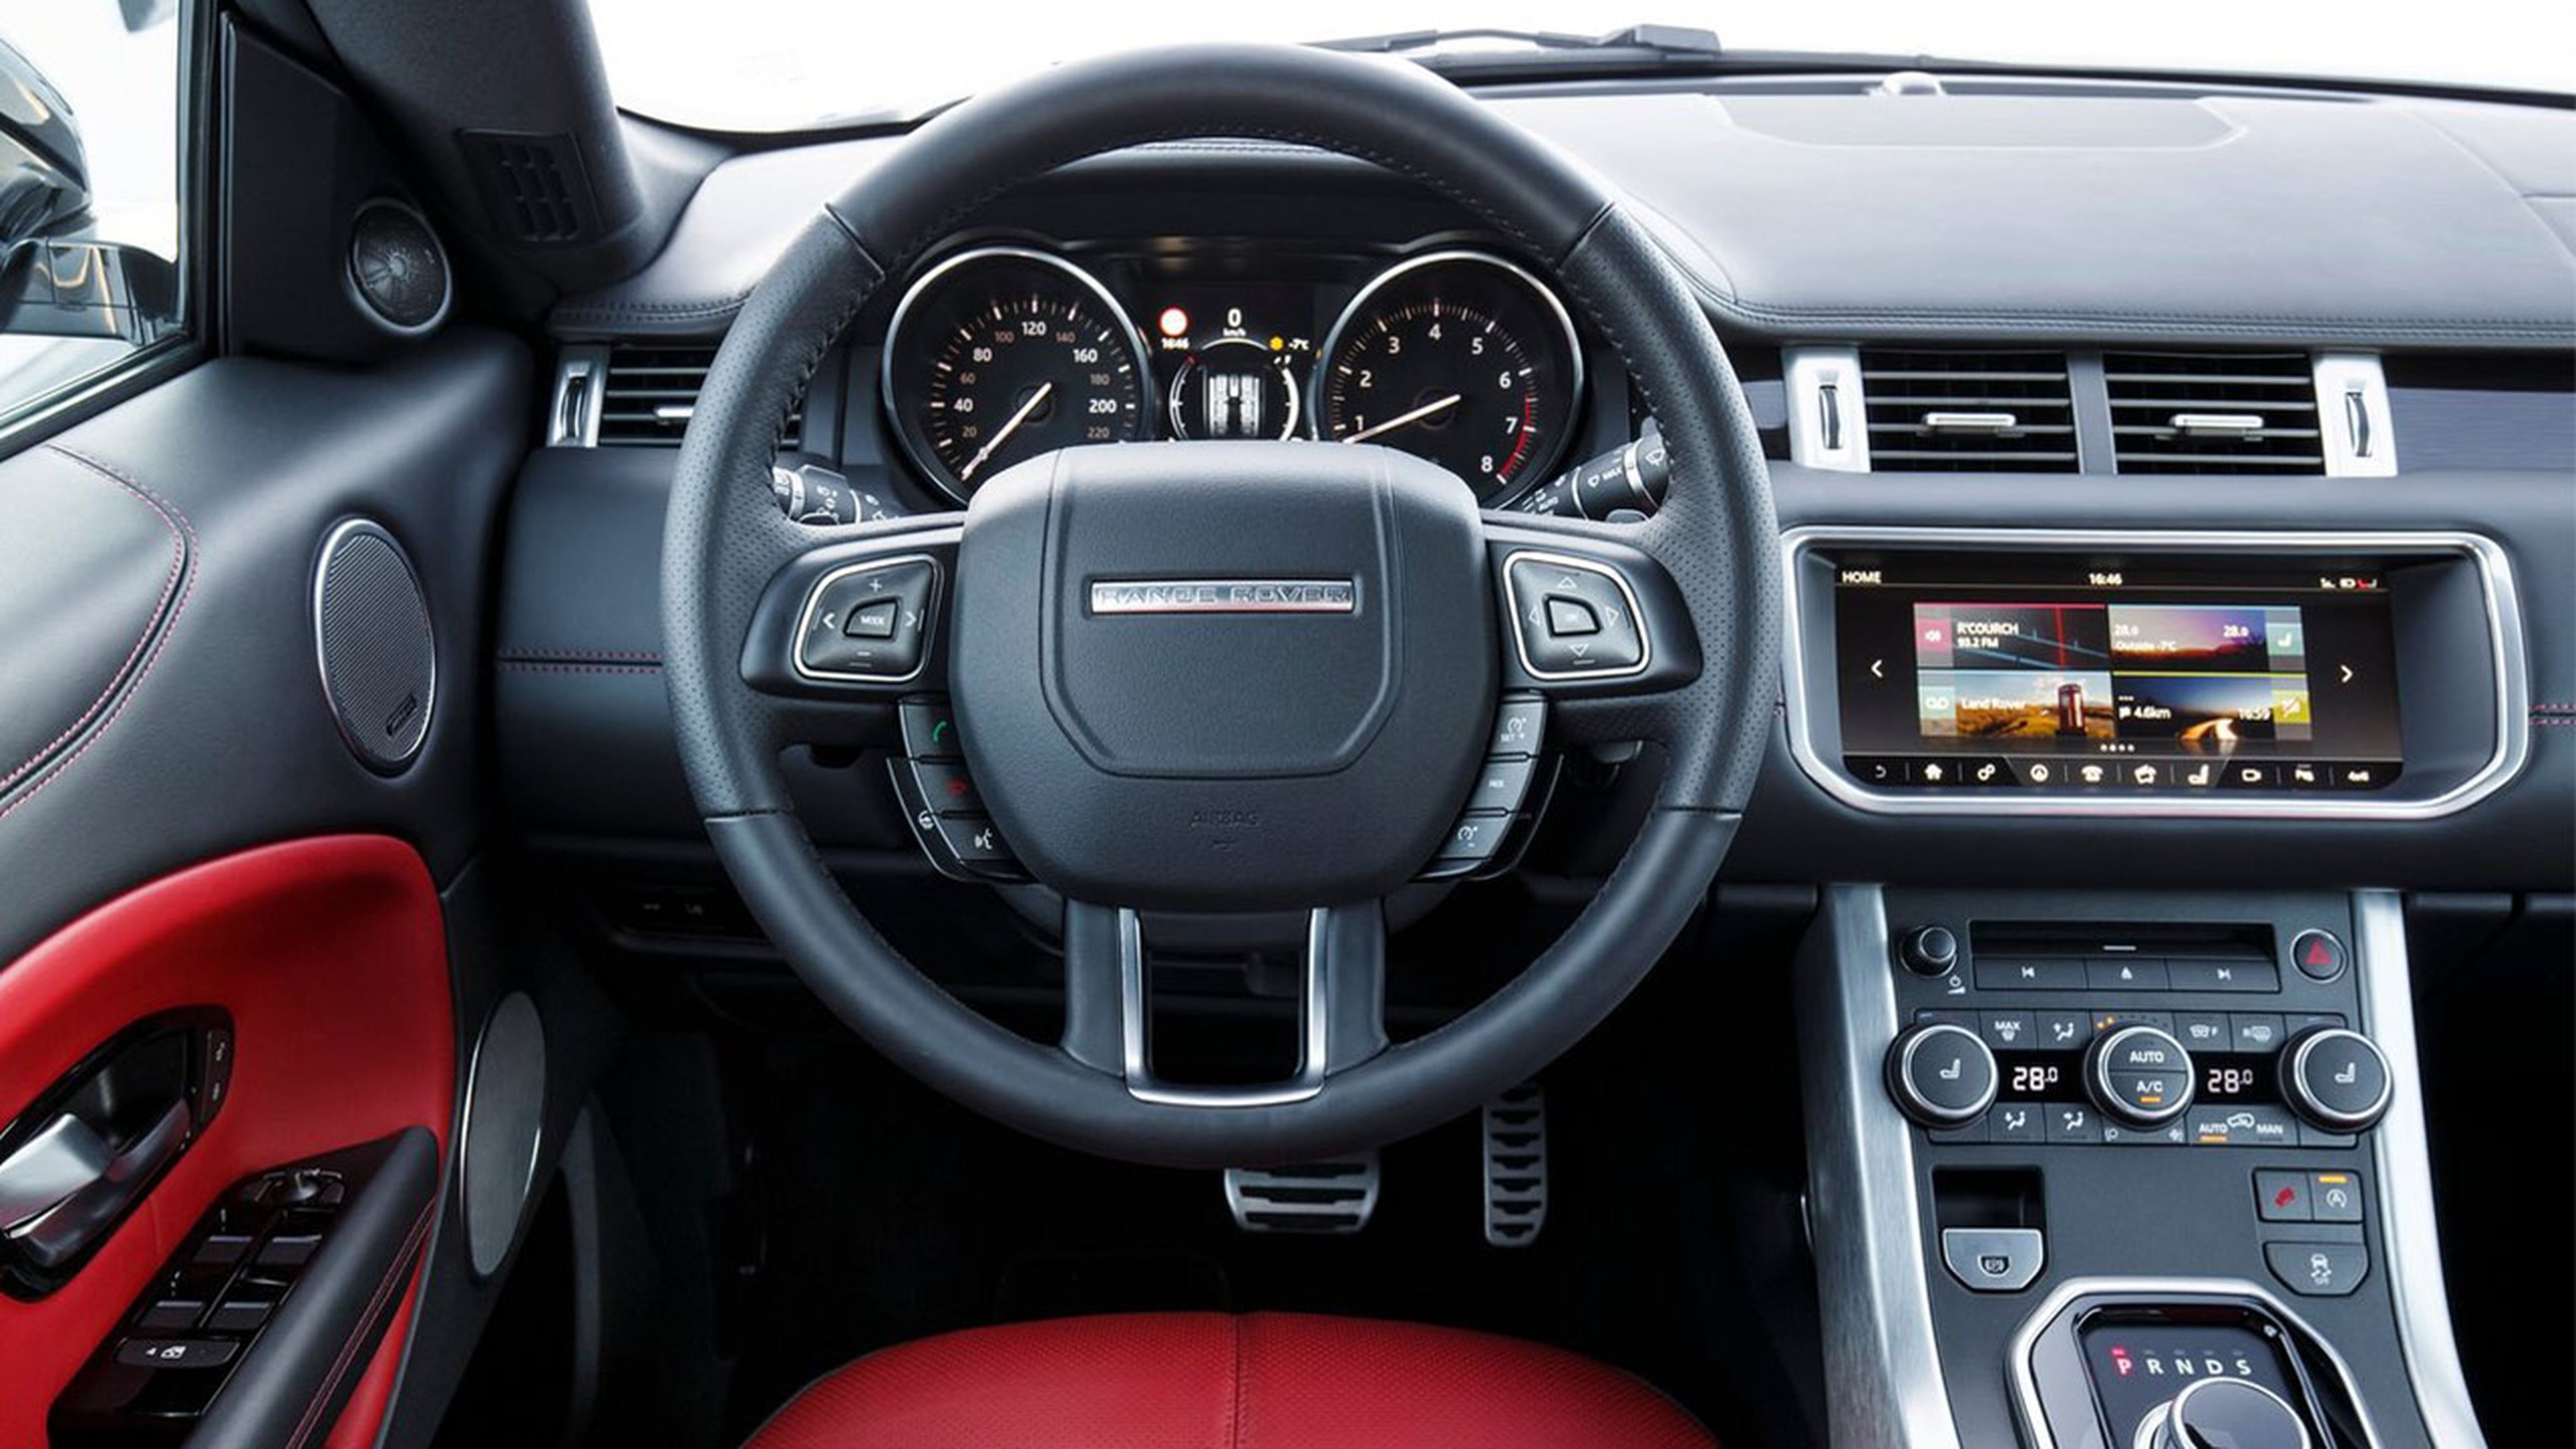 Range Rover Evoque Cabrio interior